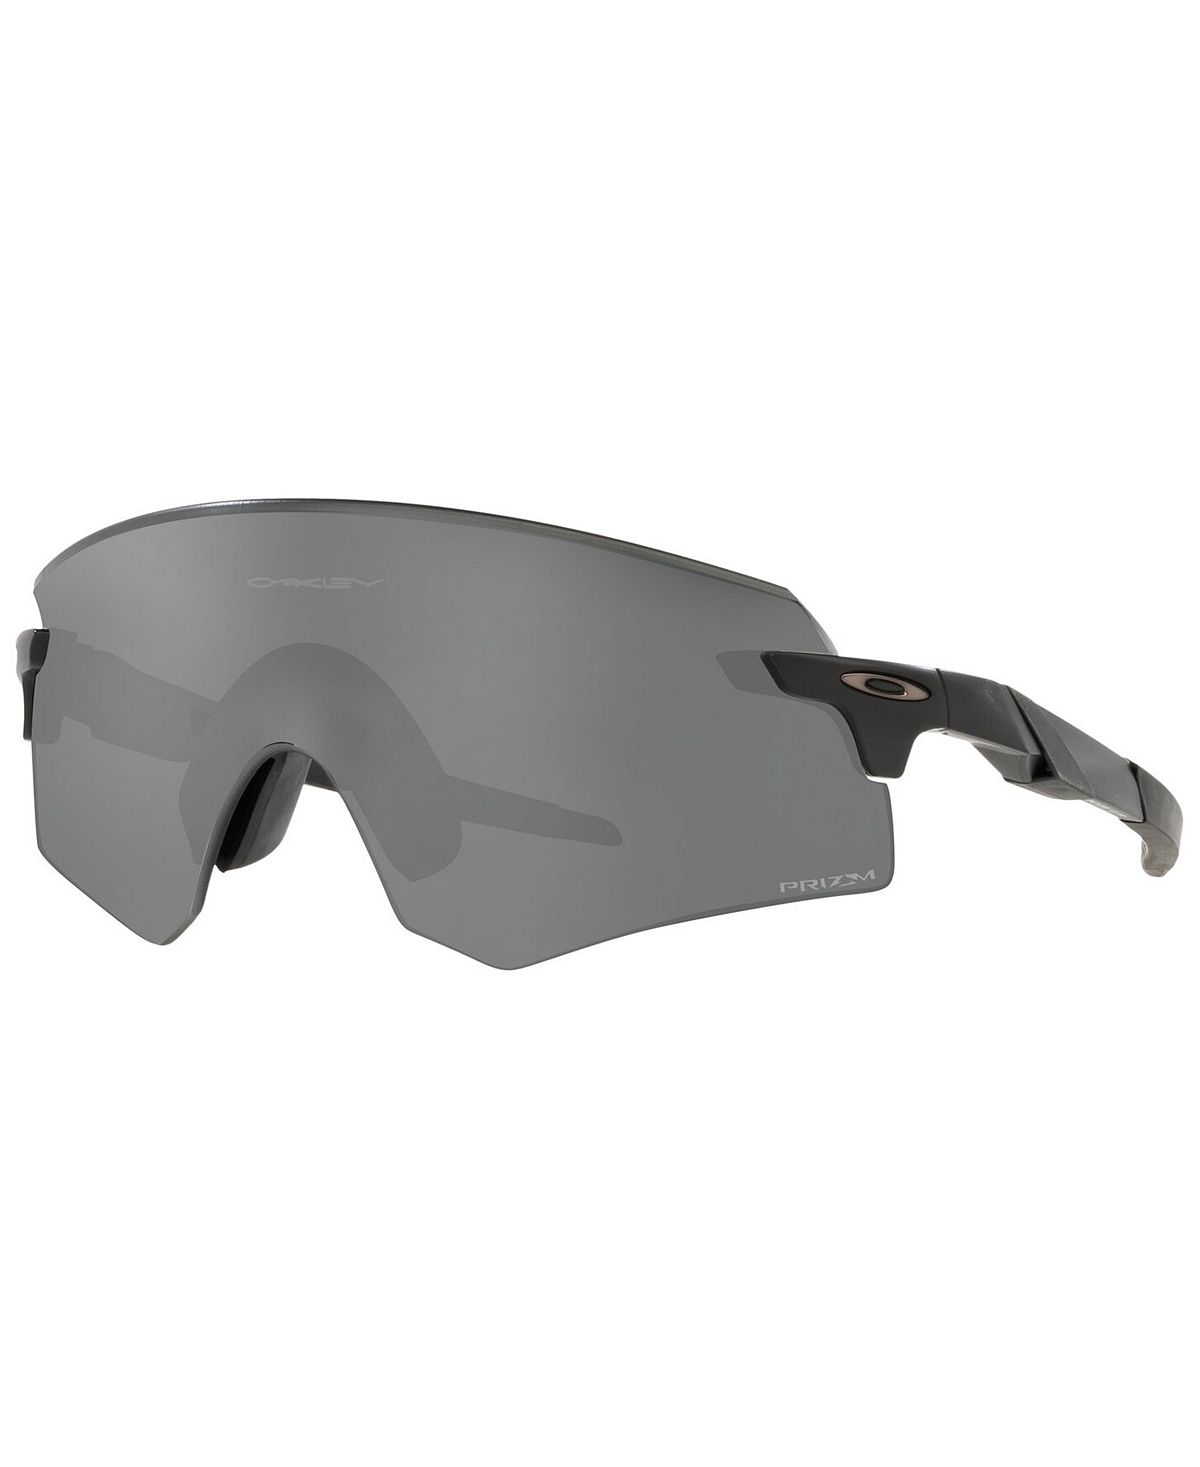 Мужские солнцезащитные очки Encoder, OO9471 36 Oakley pfi 302mbk matte black 300 мл 2215b001